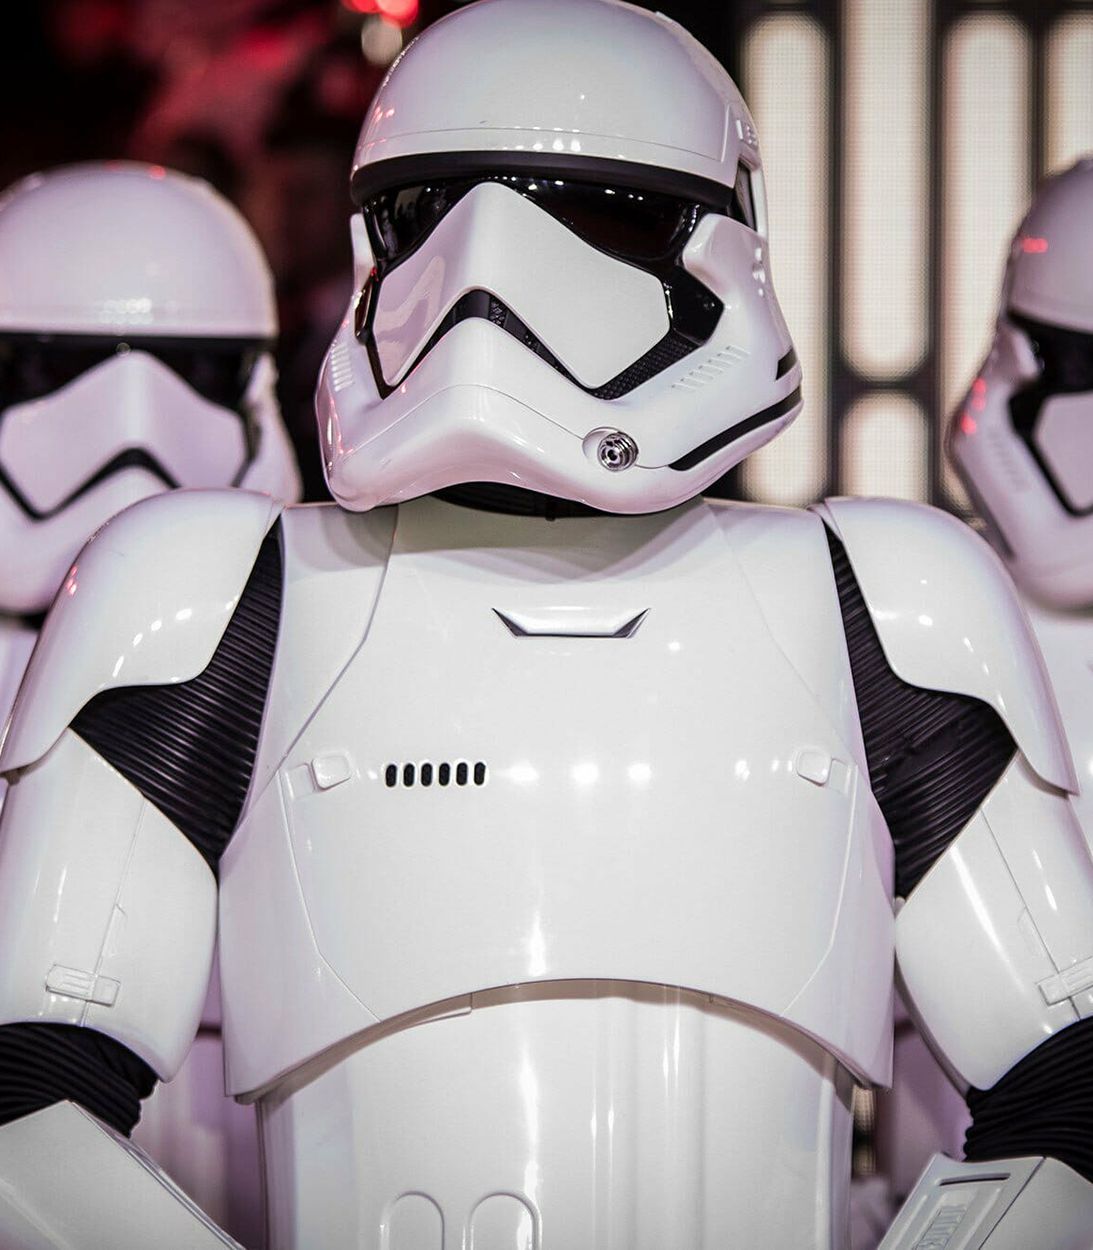 Star Wars First Order stormtroopers vertical